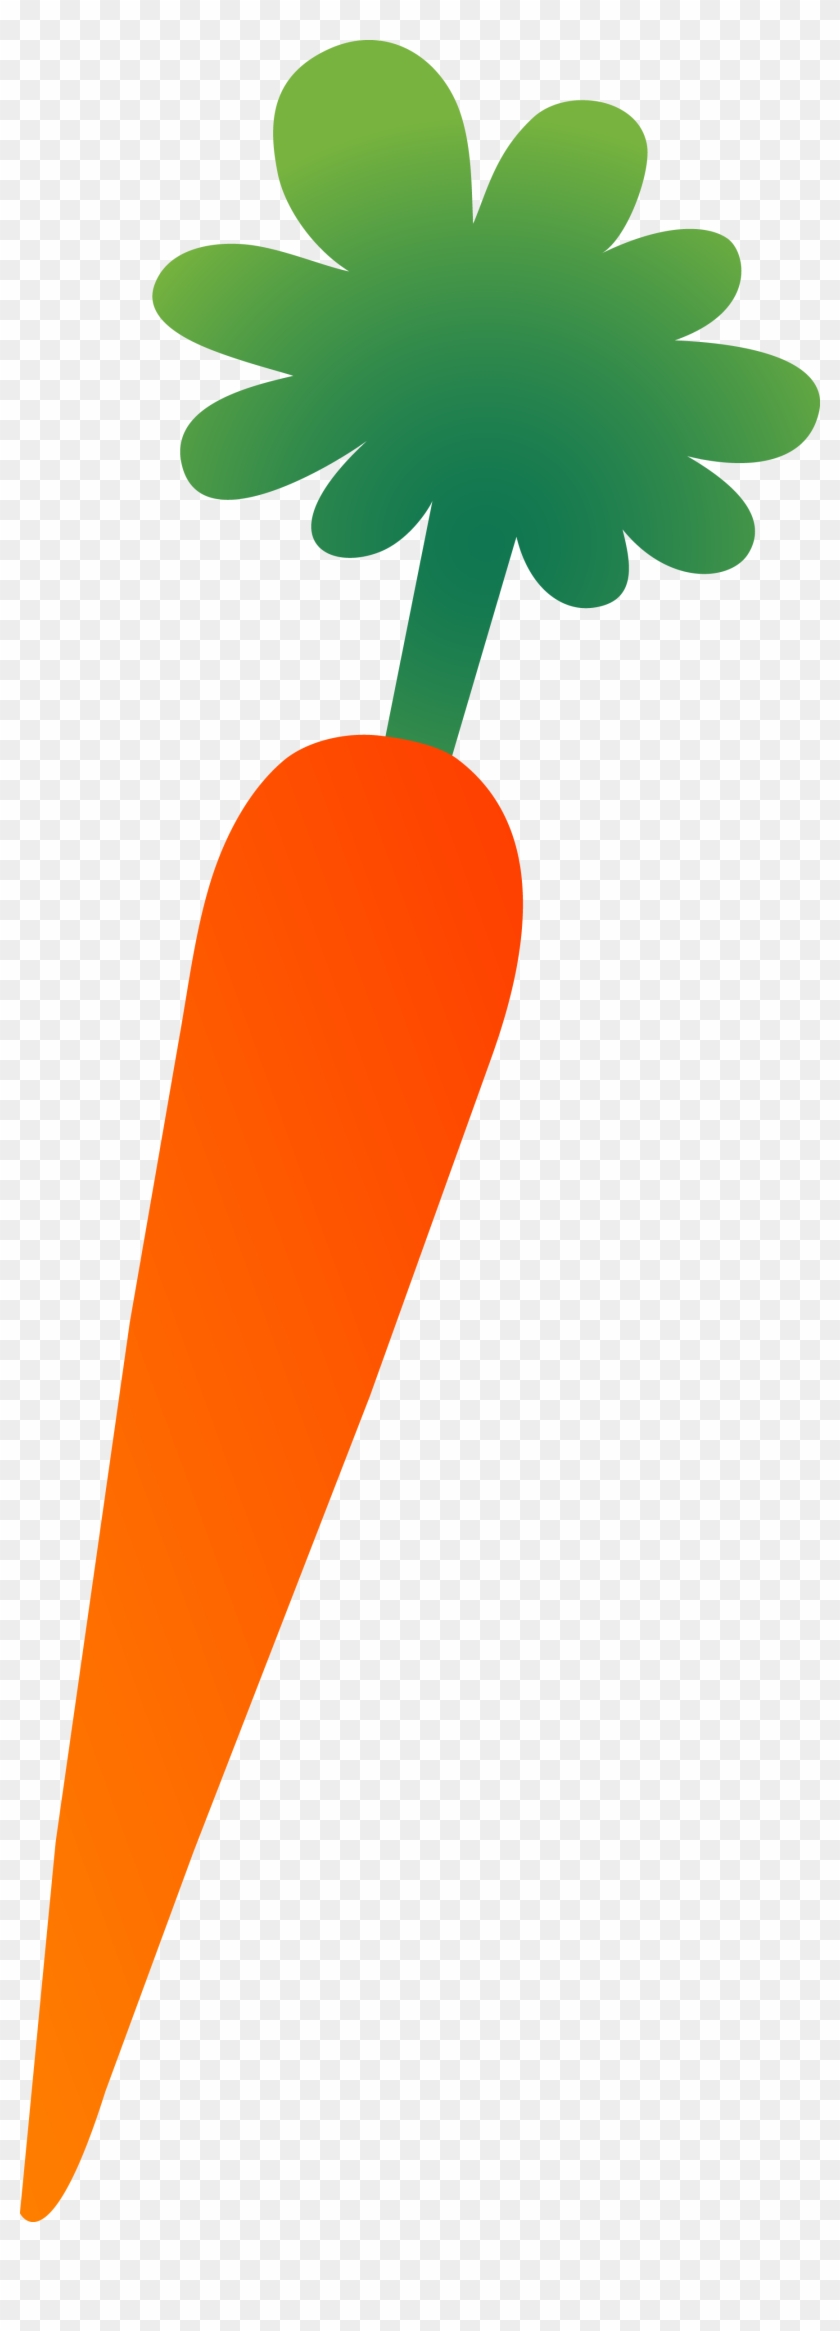 Large Single Orange Carrot - Carrot Clip Art #430664